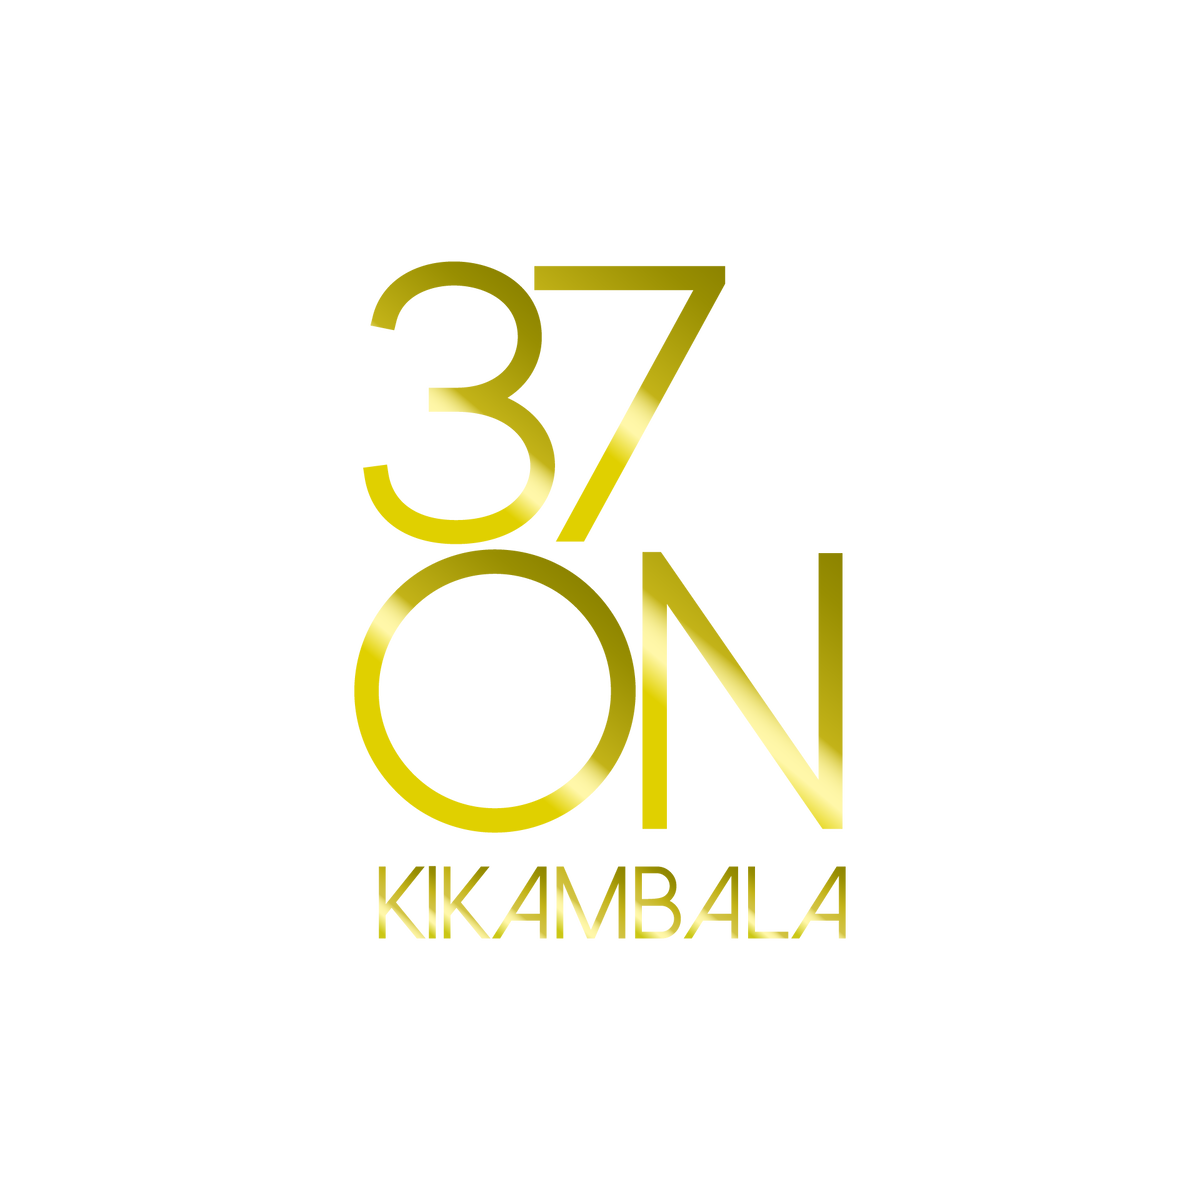 37 on Kikambala - 3卧室